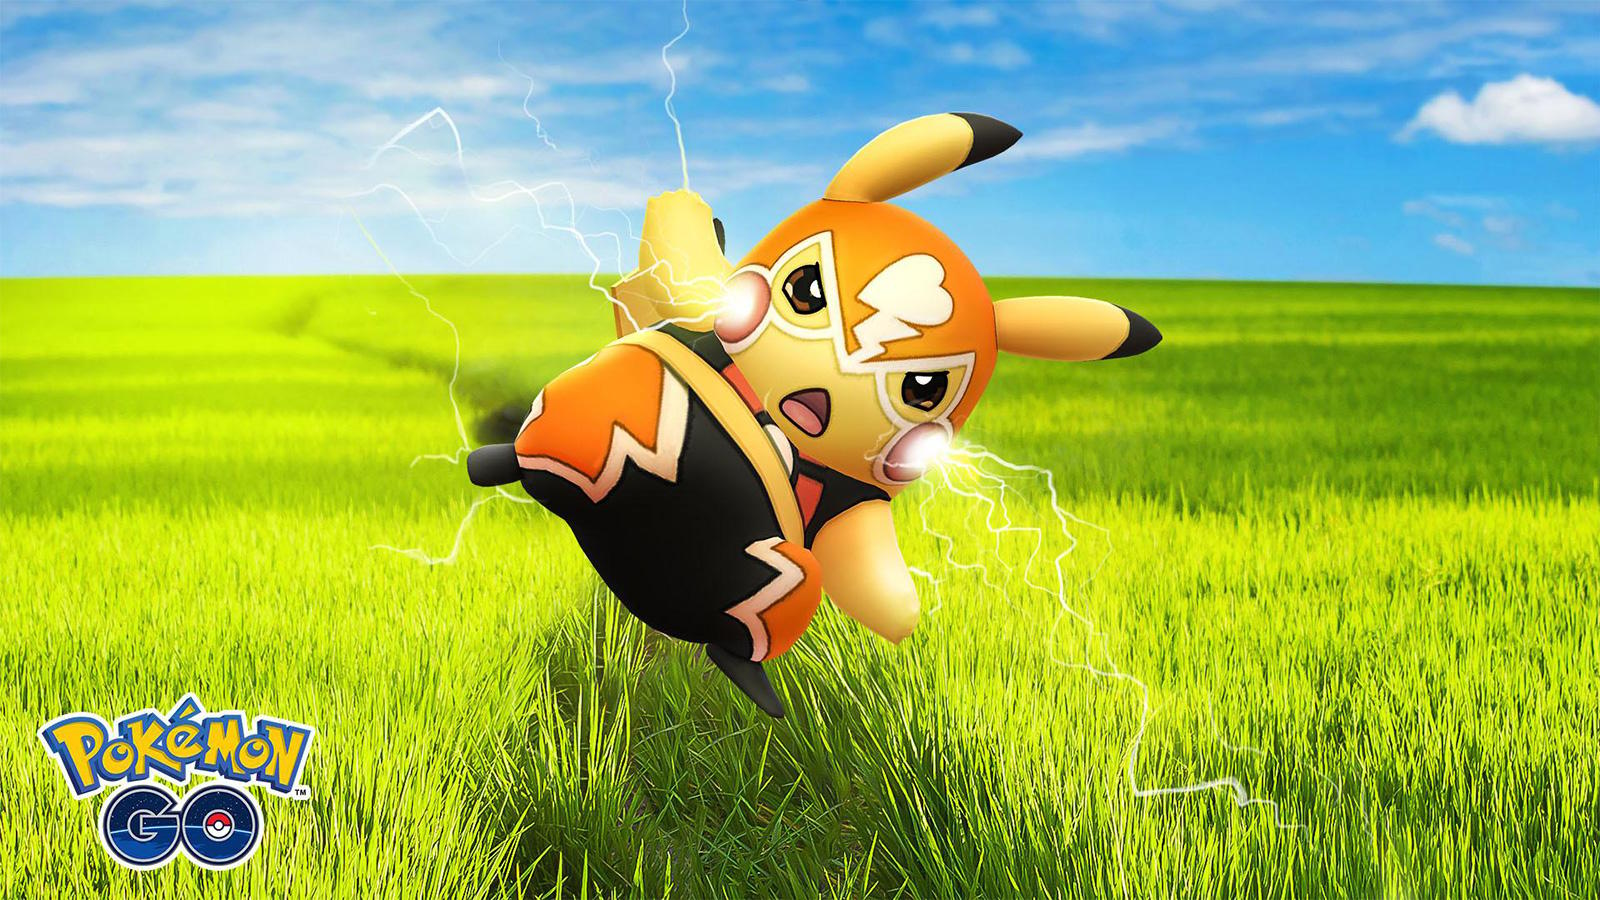 Shiny Costume Pikachu for Pokemon Go Choose One. Registered 